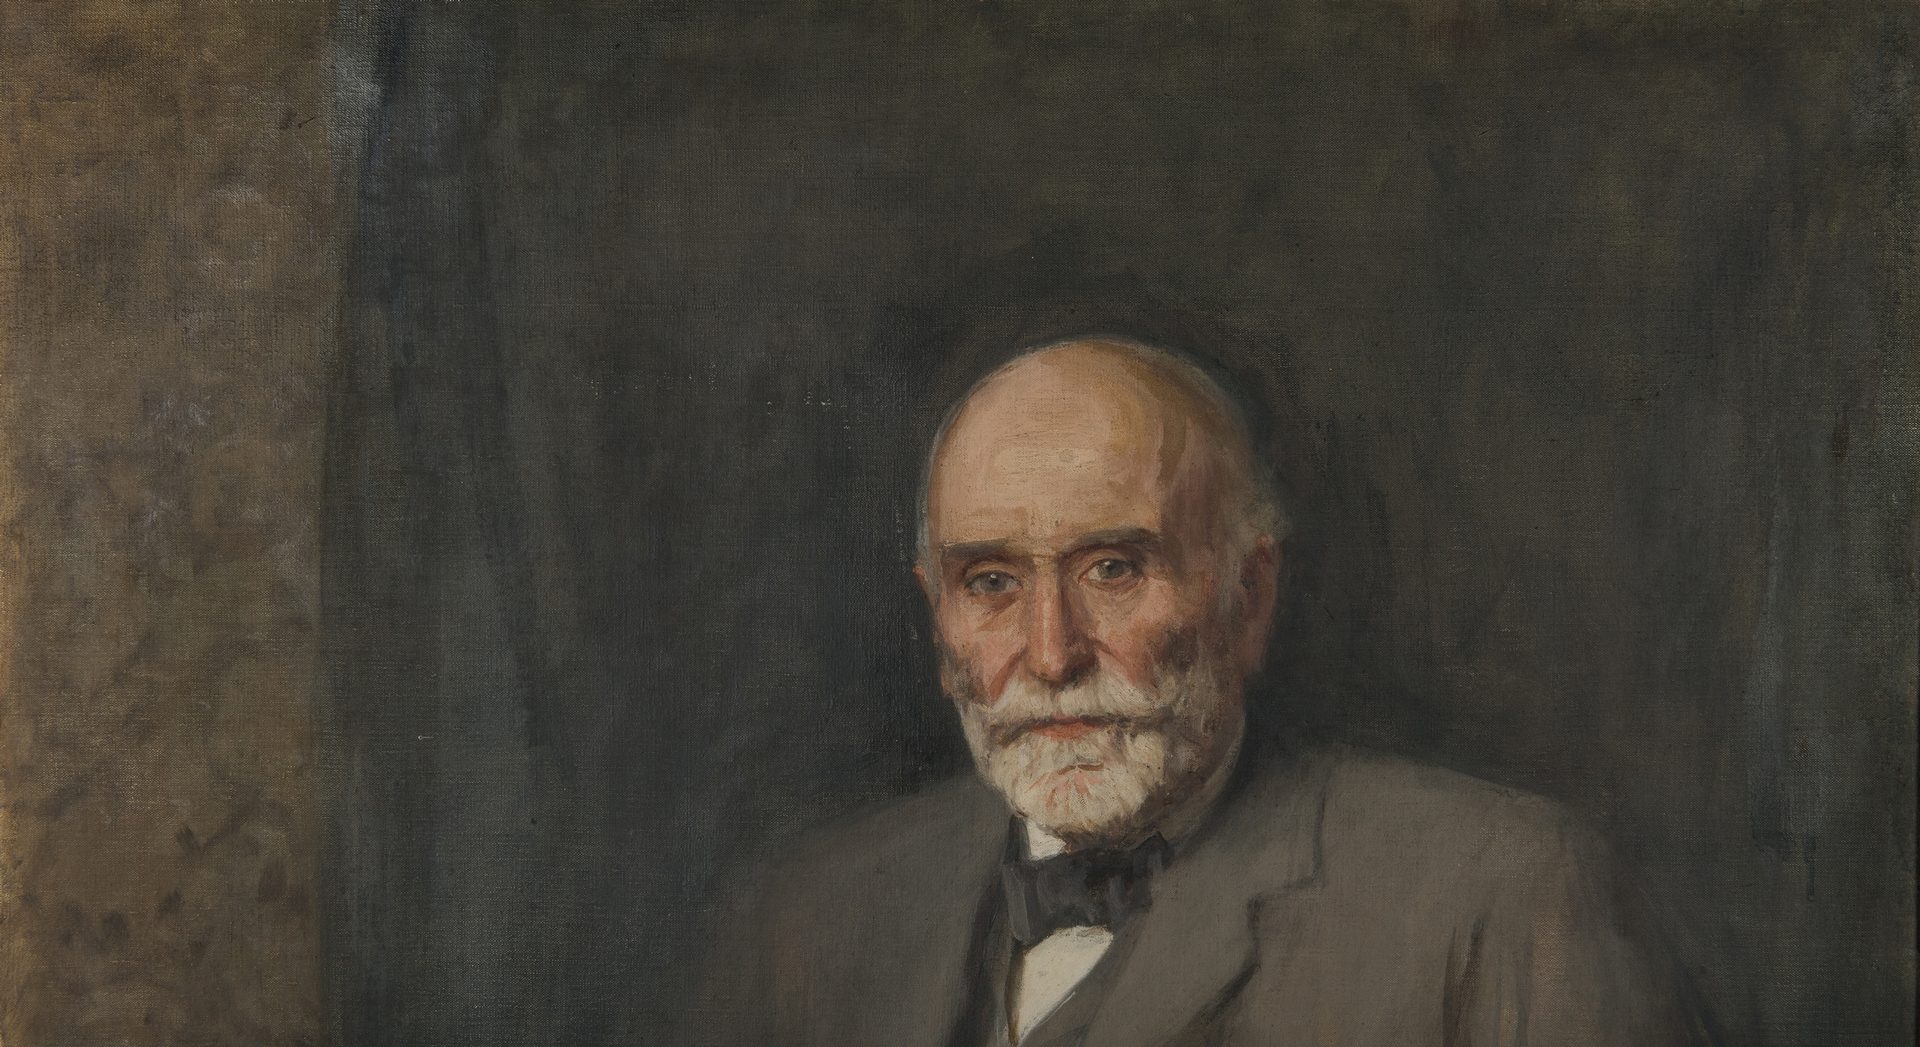 Lot 372: Duncan McGregor Whyte, portrait of Hugh MacDiarmid